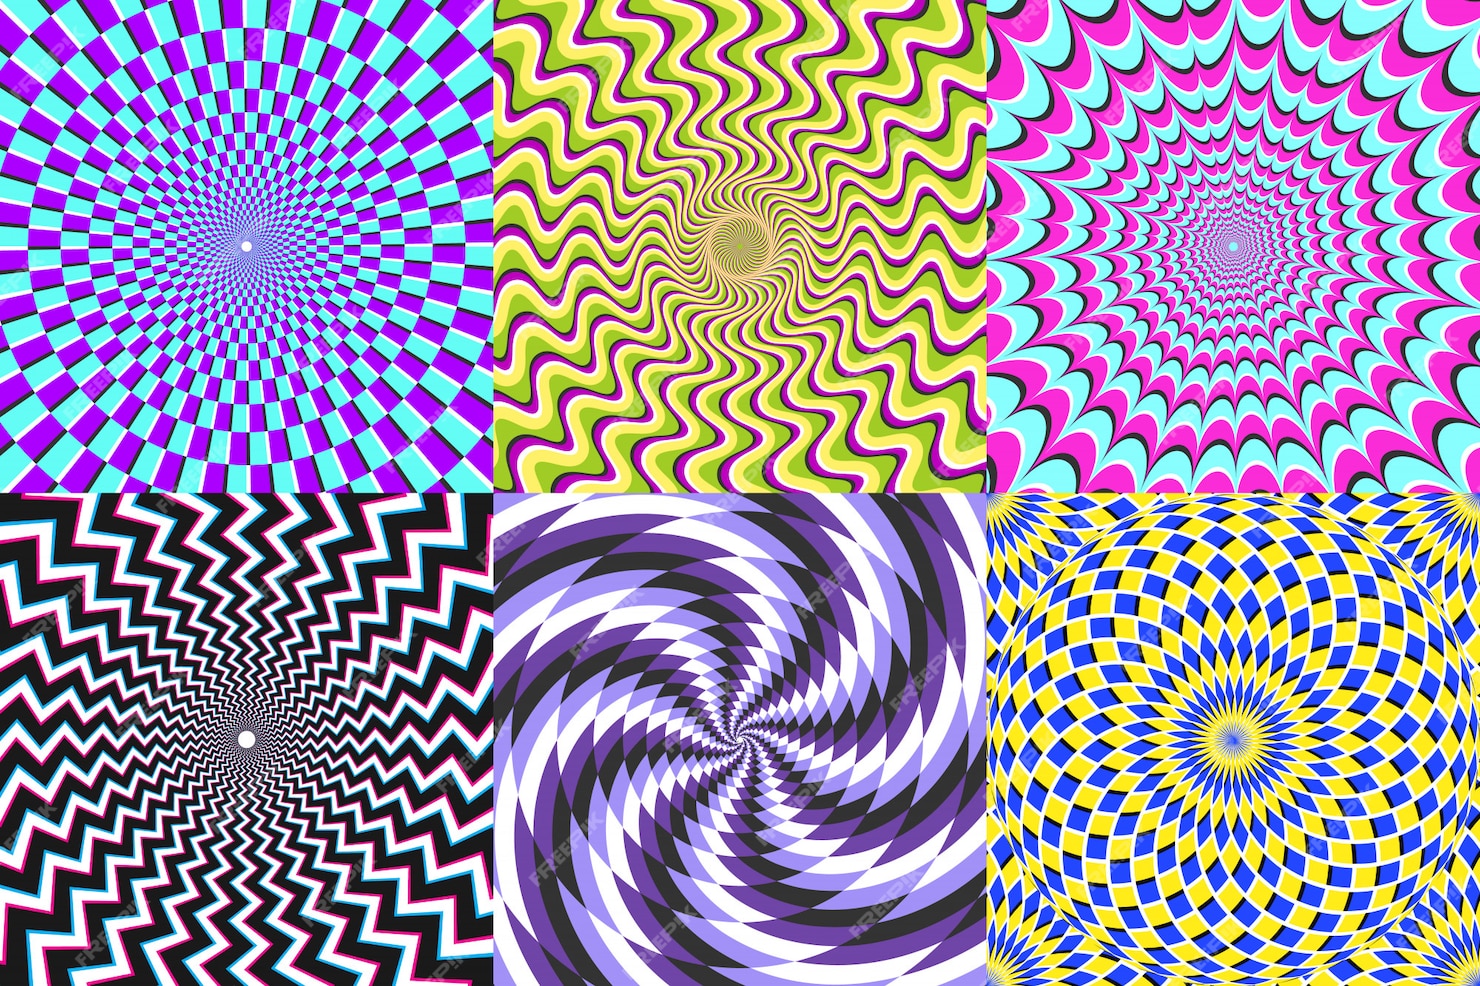 Espiral Psicodélica Ilusión óptica Espirales De Ilusión Y Colorido Abstracción Hipnosis 